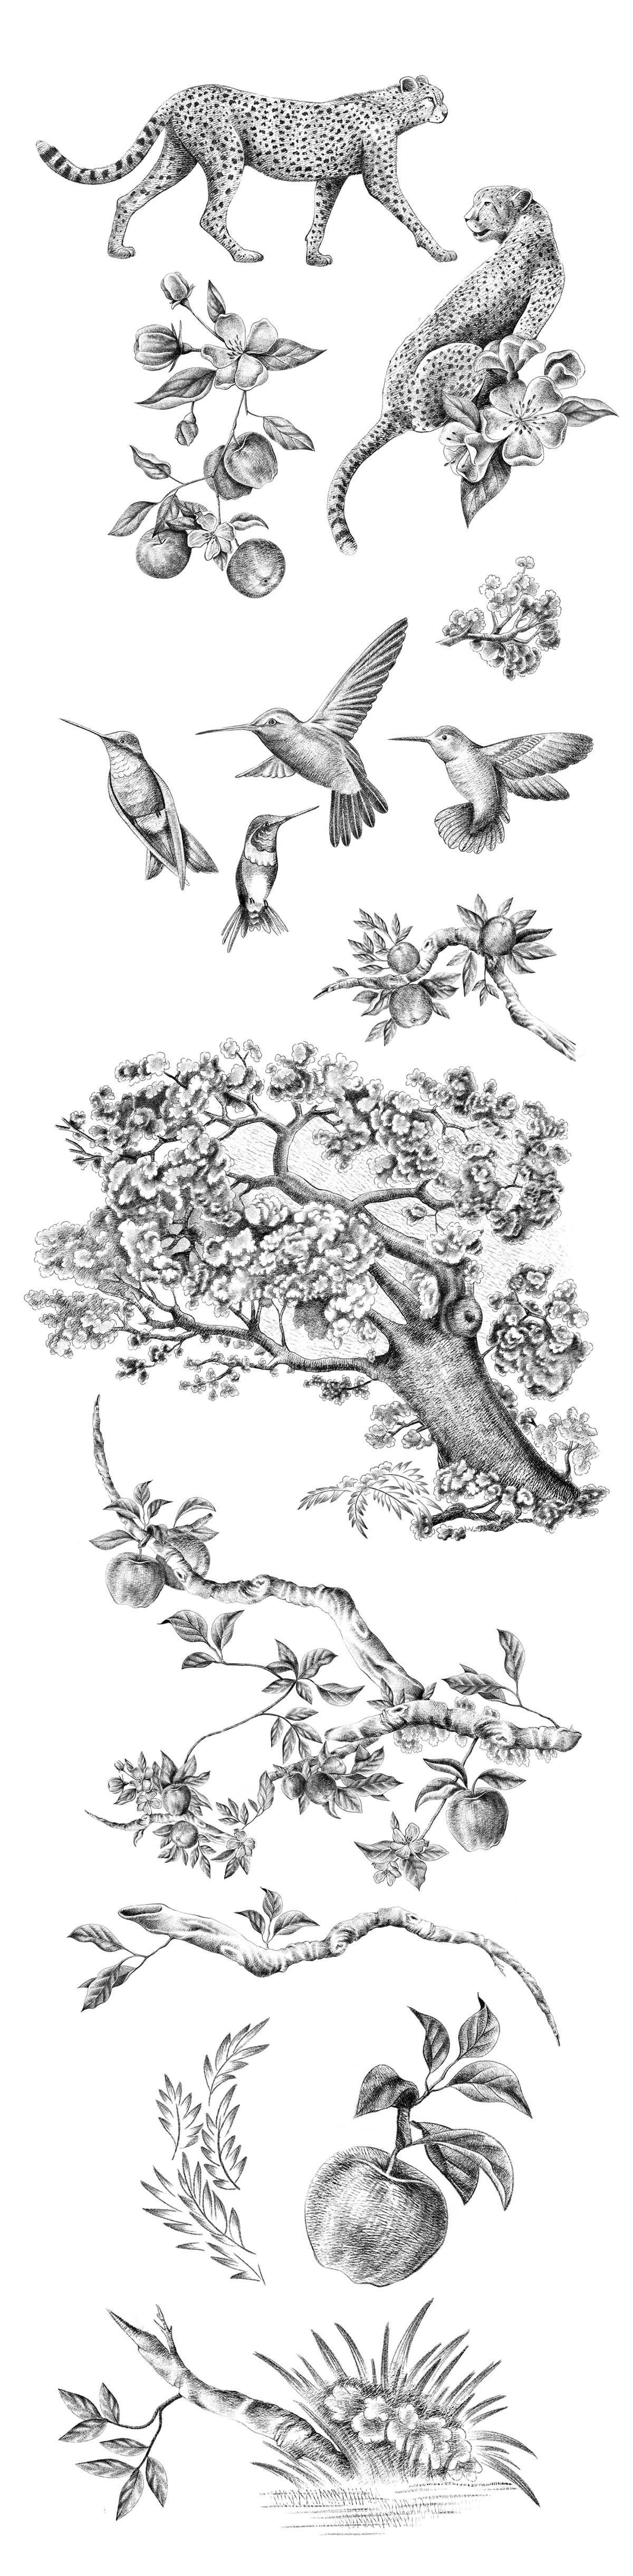 toile de jouy print pattern etching cheetah Style hummingbird textile design  Apple Tree vintageillustration